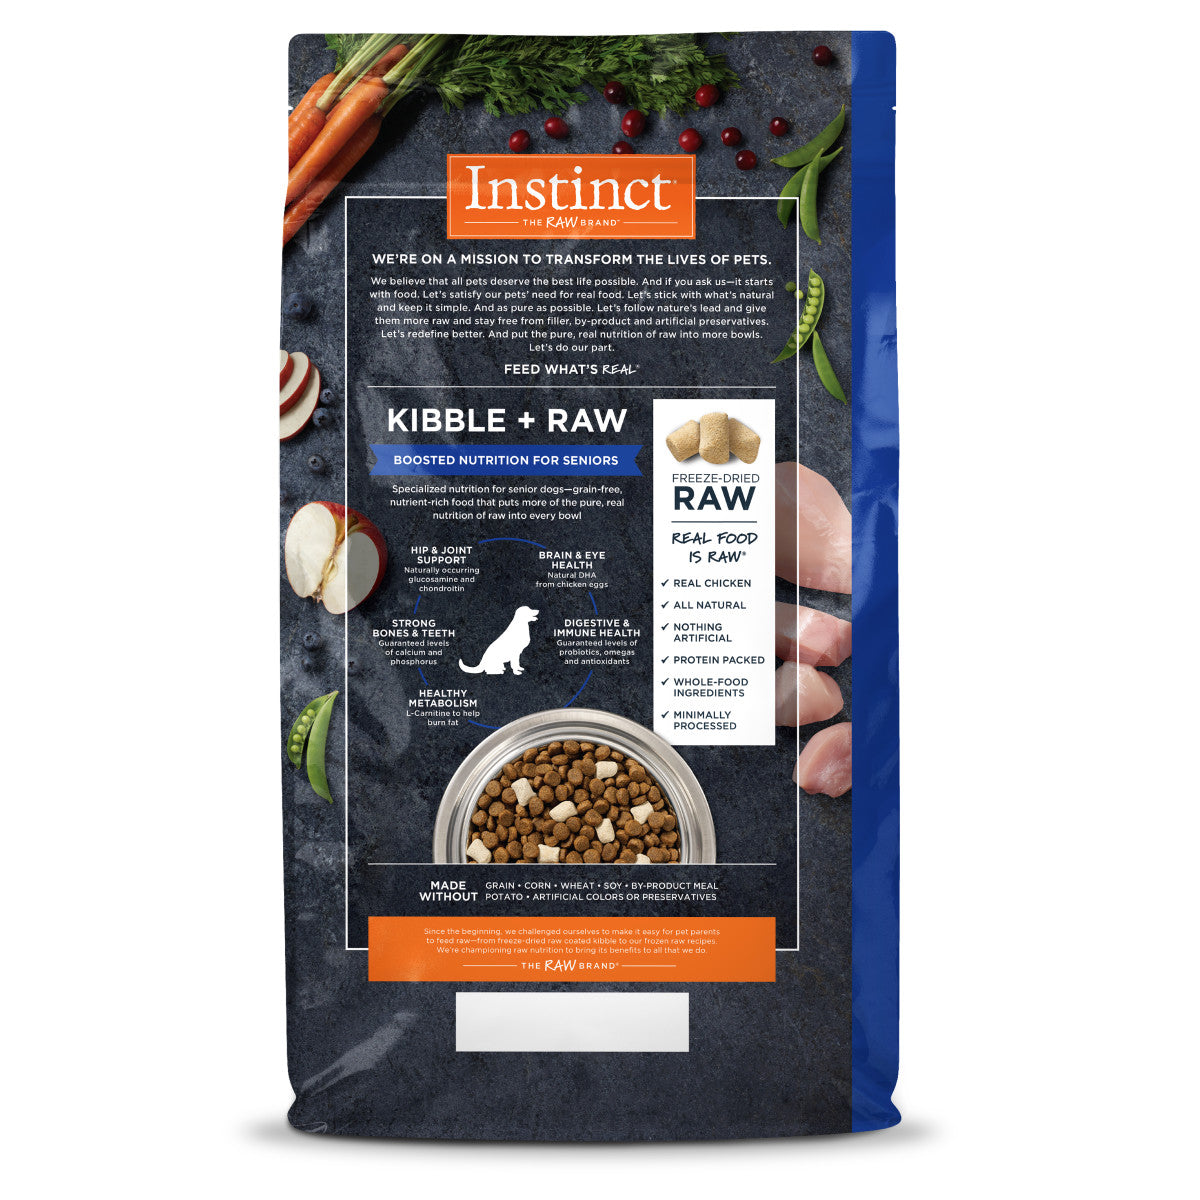 Instinct - Raw Boost Real Chicken Recipe (For Seniors)